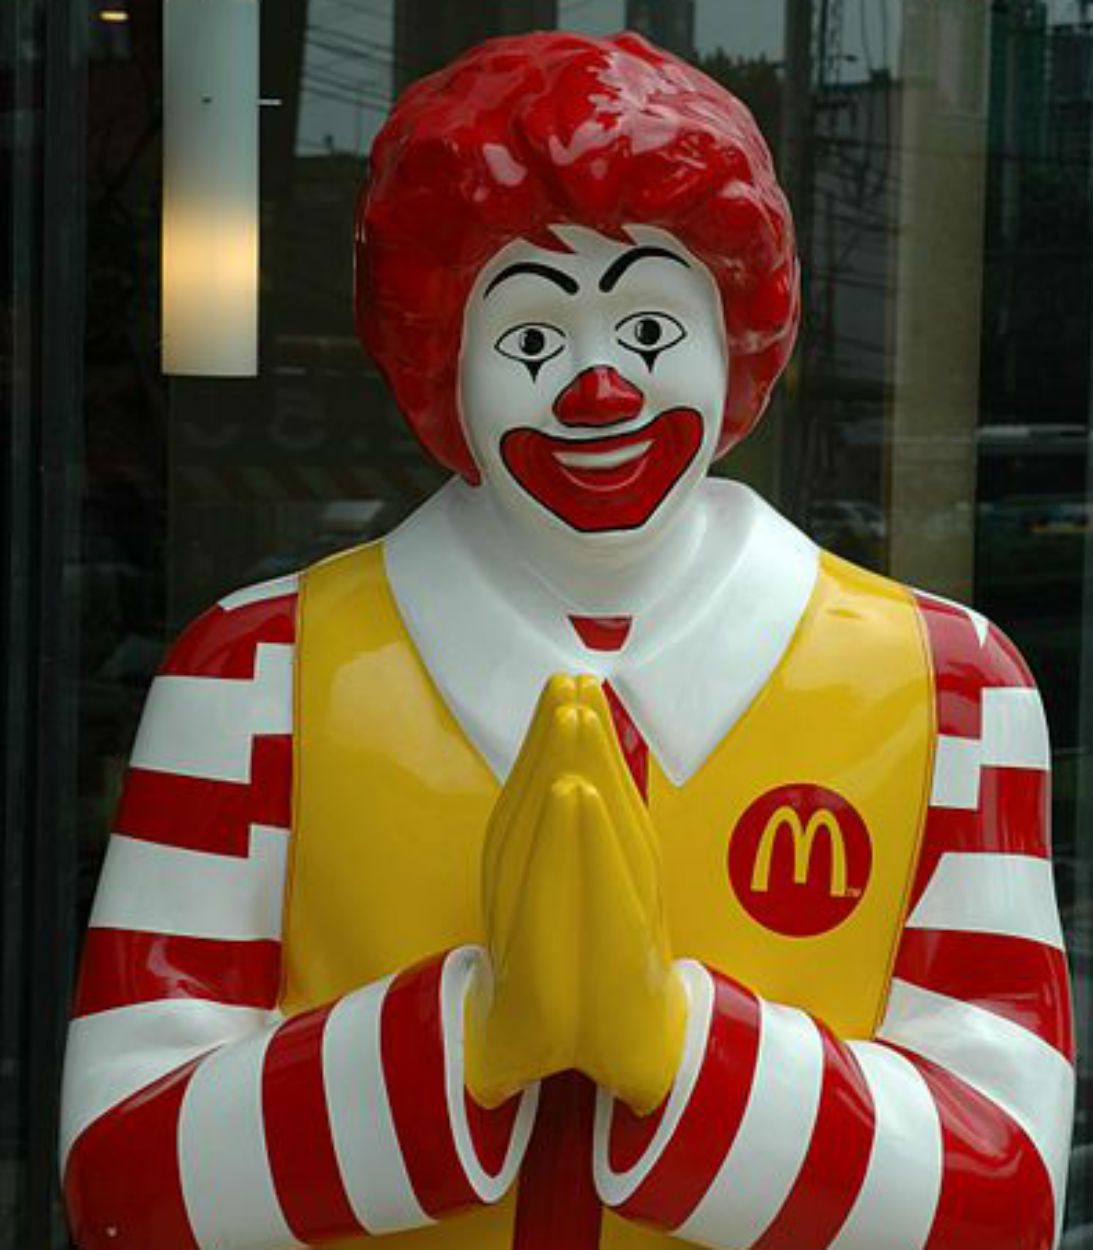 Ronald McDonald Wikimedia Commons Vertical